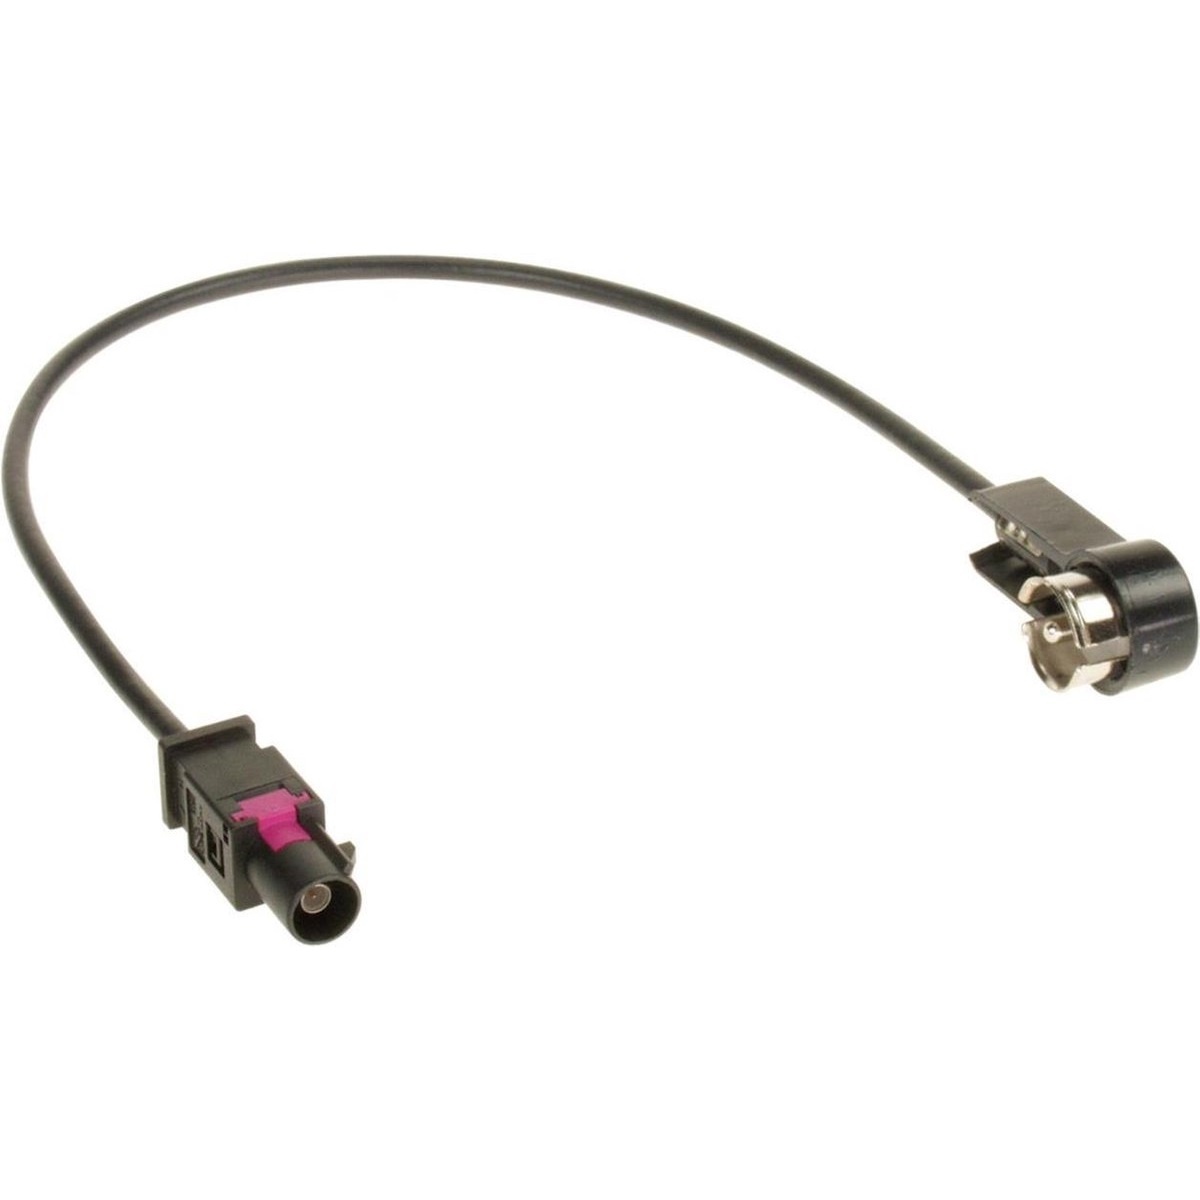 https://cdn.webshopapp.com/shops/349238/files/440547361/m-use-fakra-h-m-iso-m-auto-antenne-adapter-kabel-r.jpg